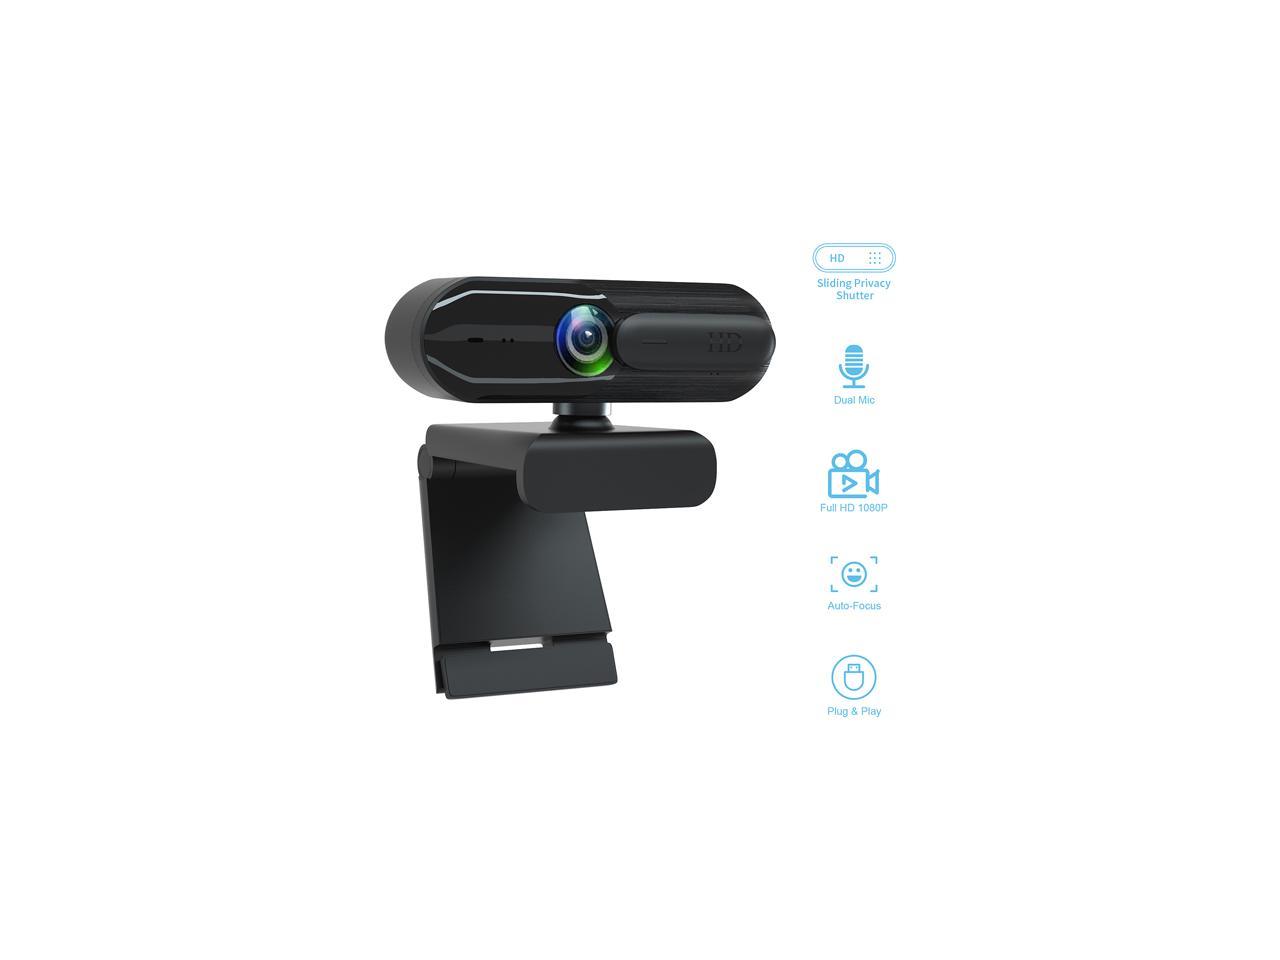 Anivia Full HD Webcam 1080p USB Webcam con Doble micrófono autoenfoque 8 MP cámara Webcams visualización Ancha Video Llamada y grabación para computadora portátil PC Skype Stream Gaming 